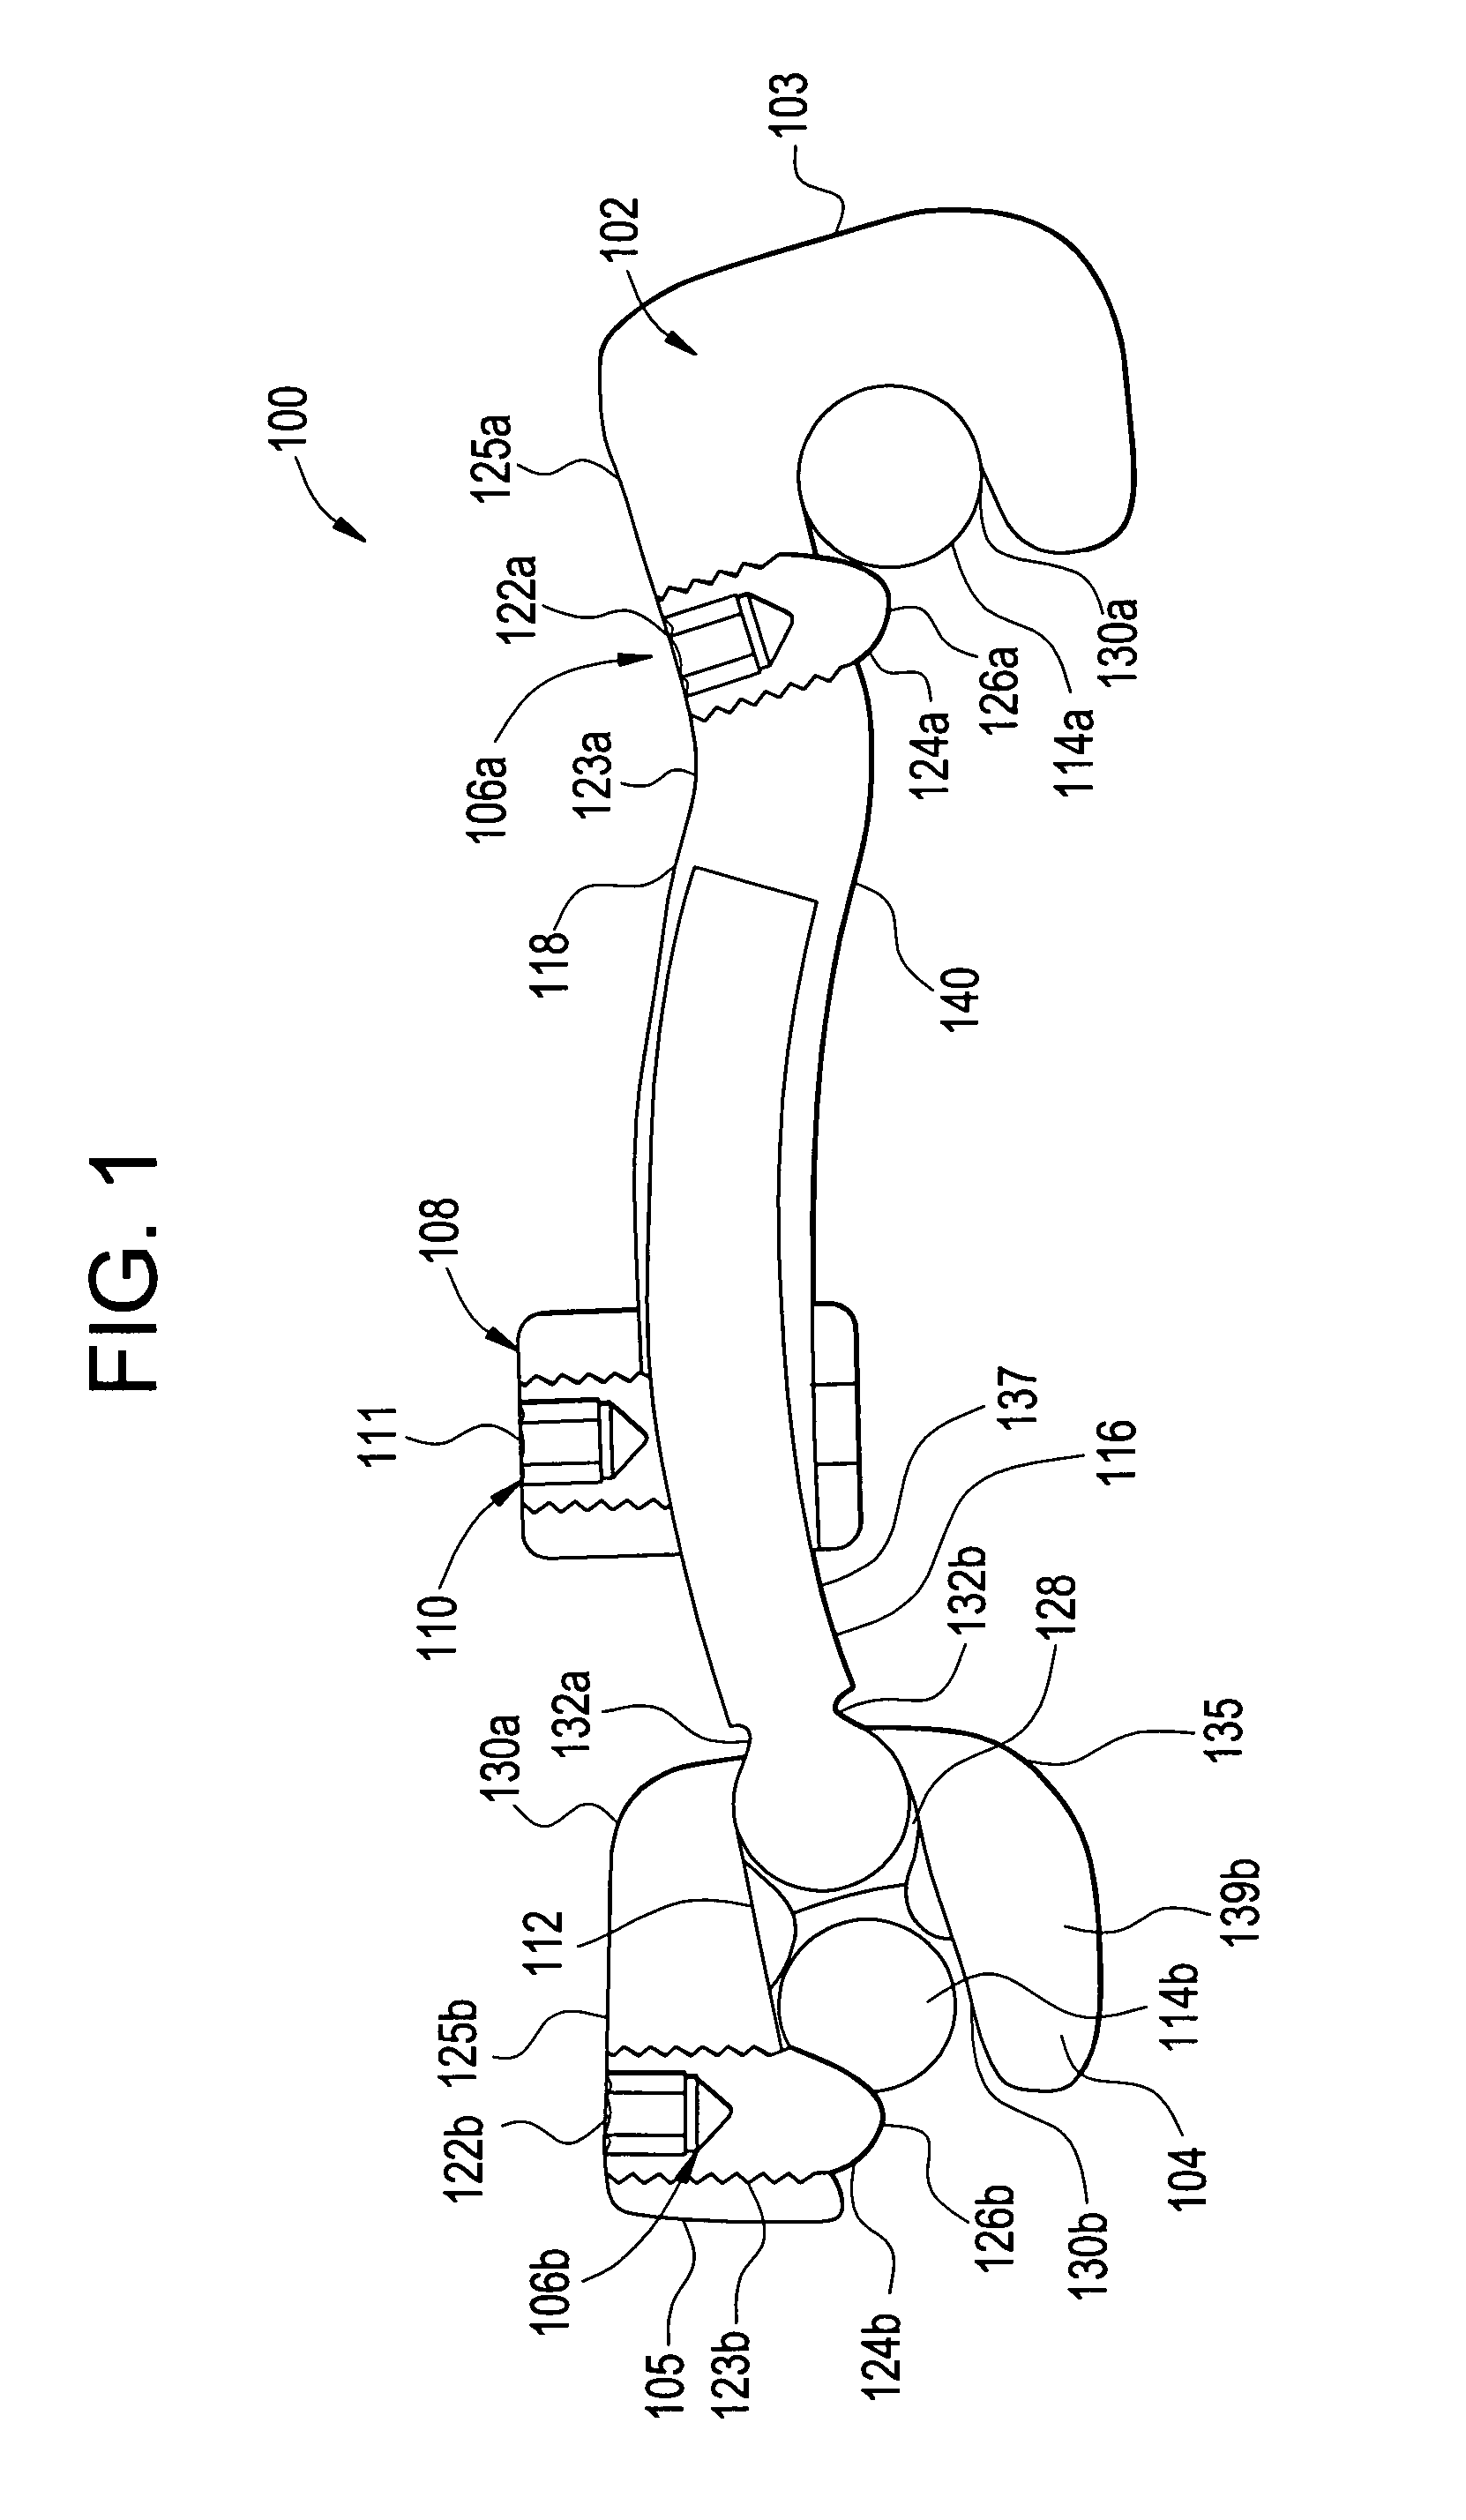 Multi-axial transverse rod connector